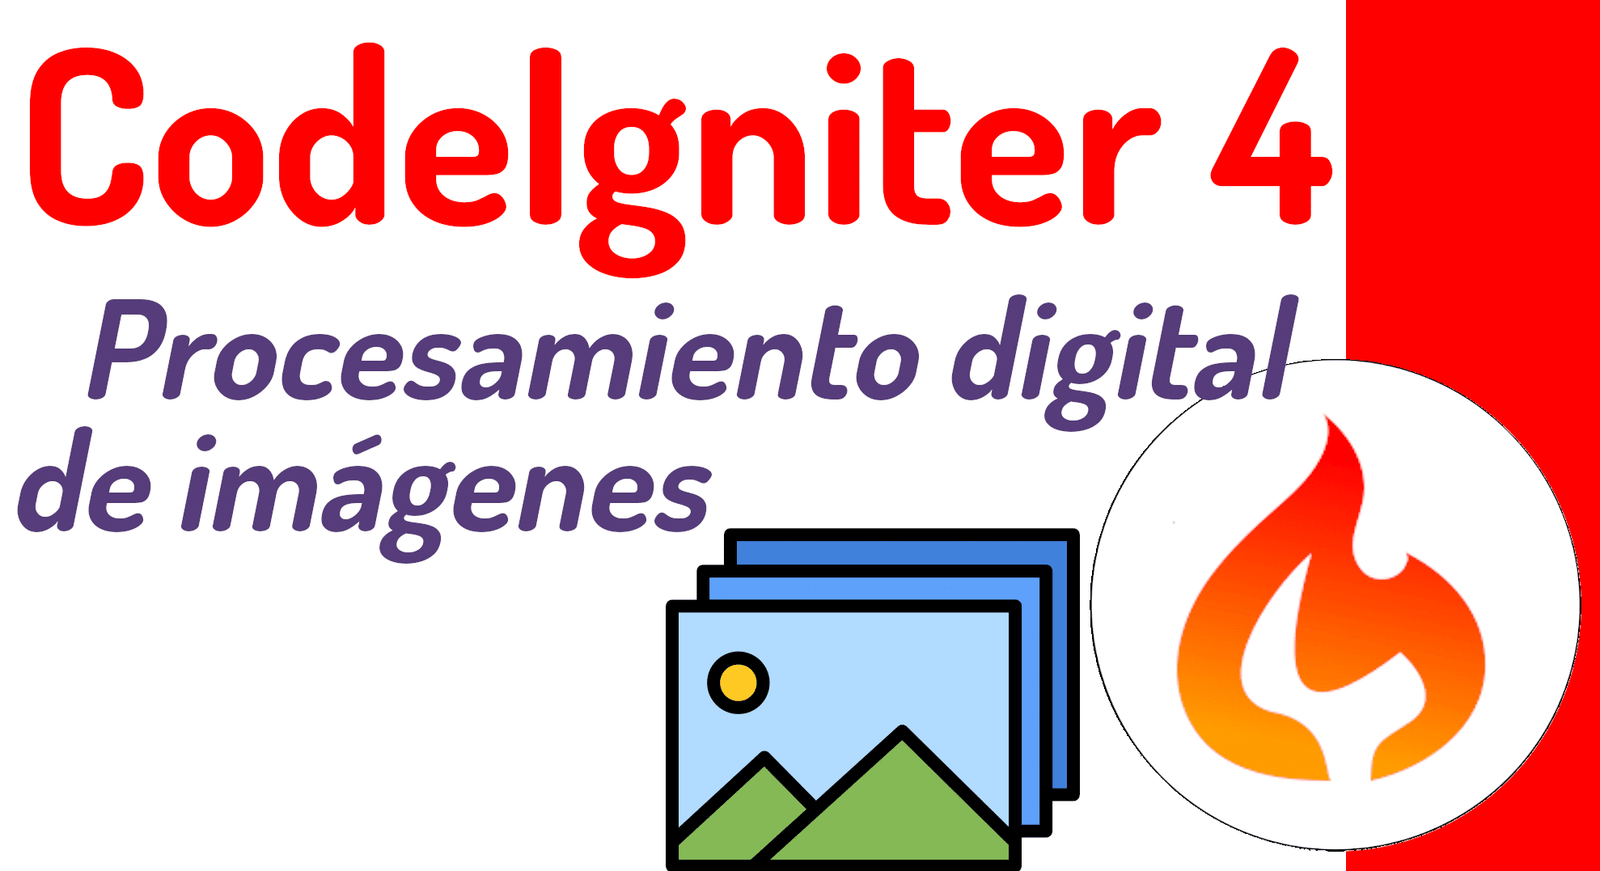 Digital image processing in CodeIgniter 4